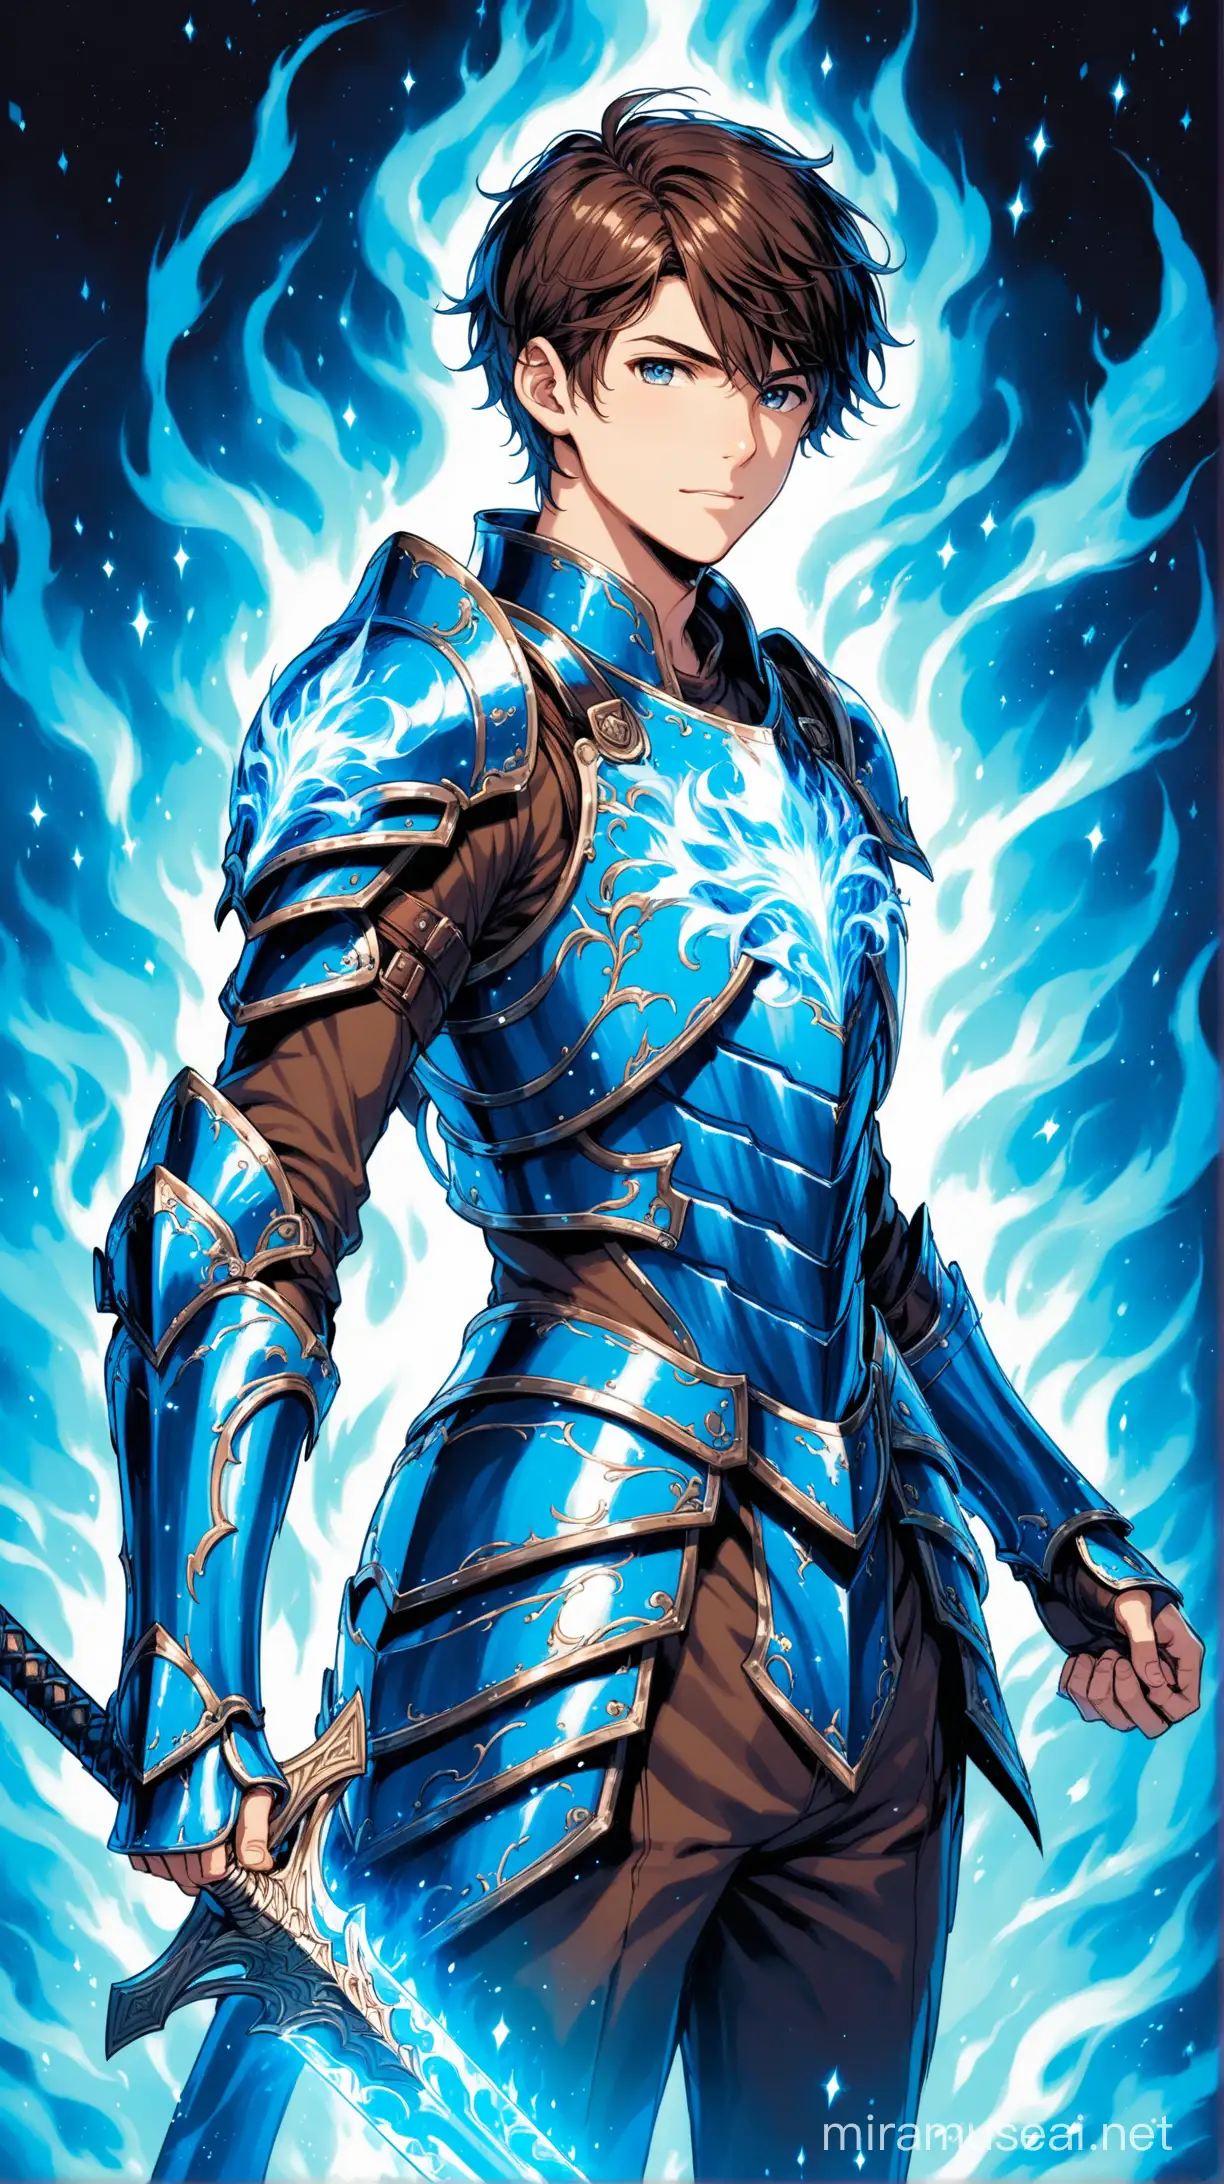 Young Man in Blue Fire Armor Wielding Sword